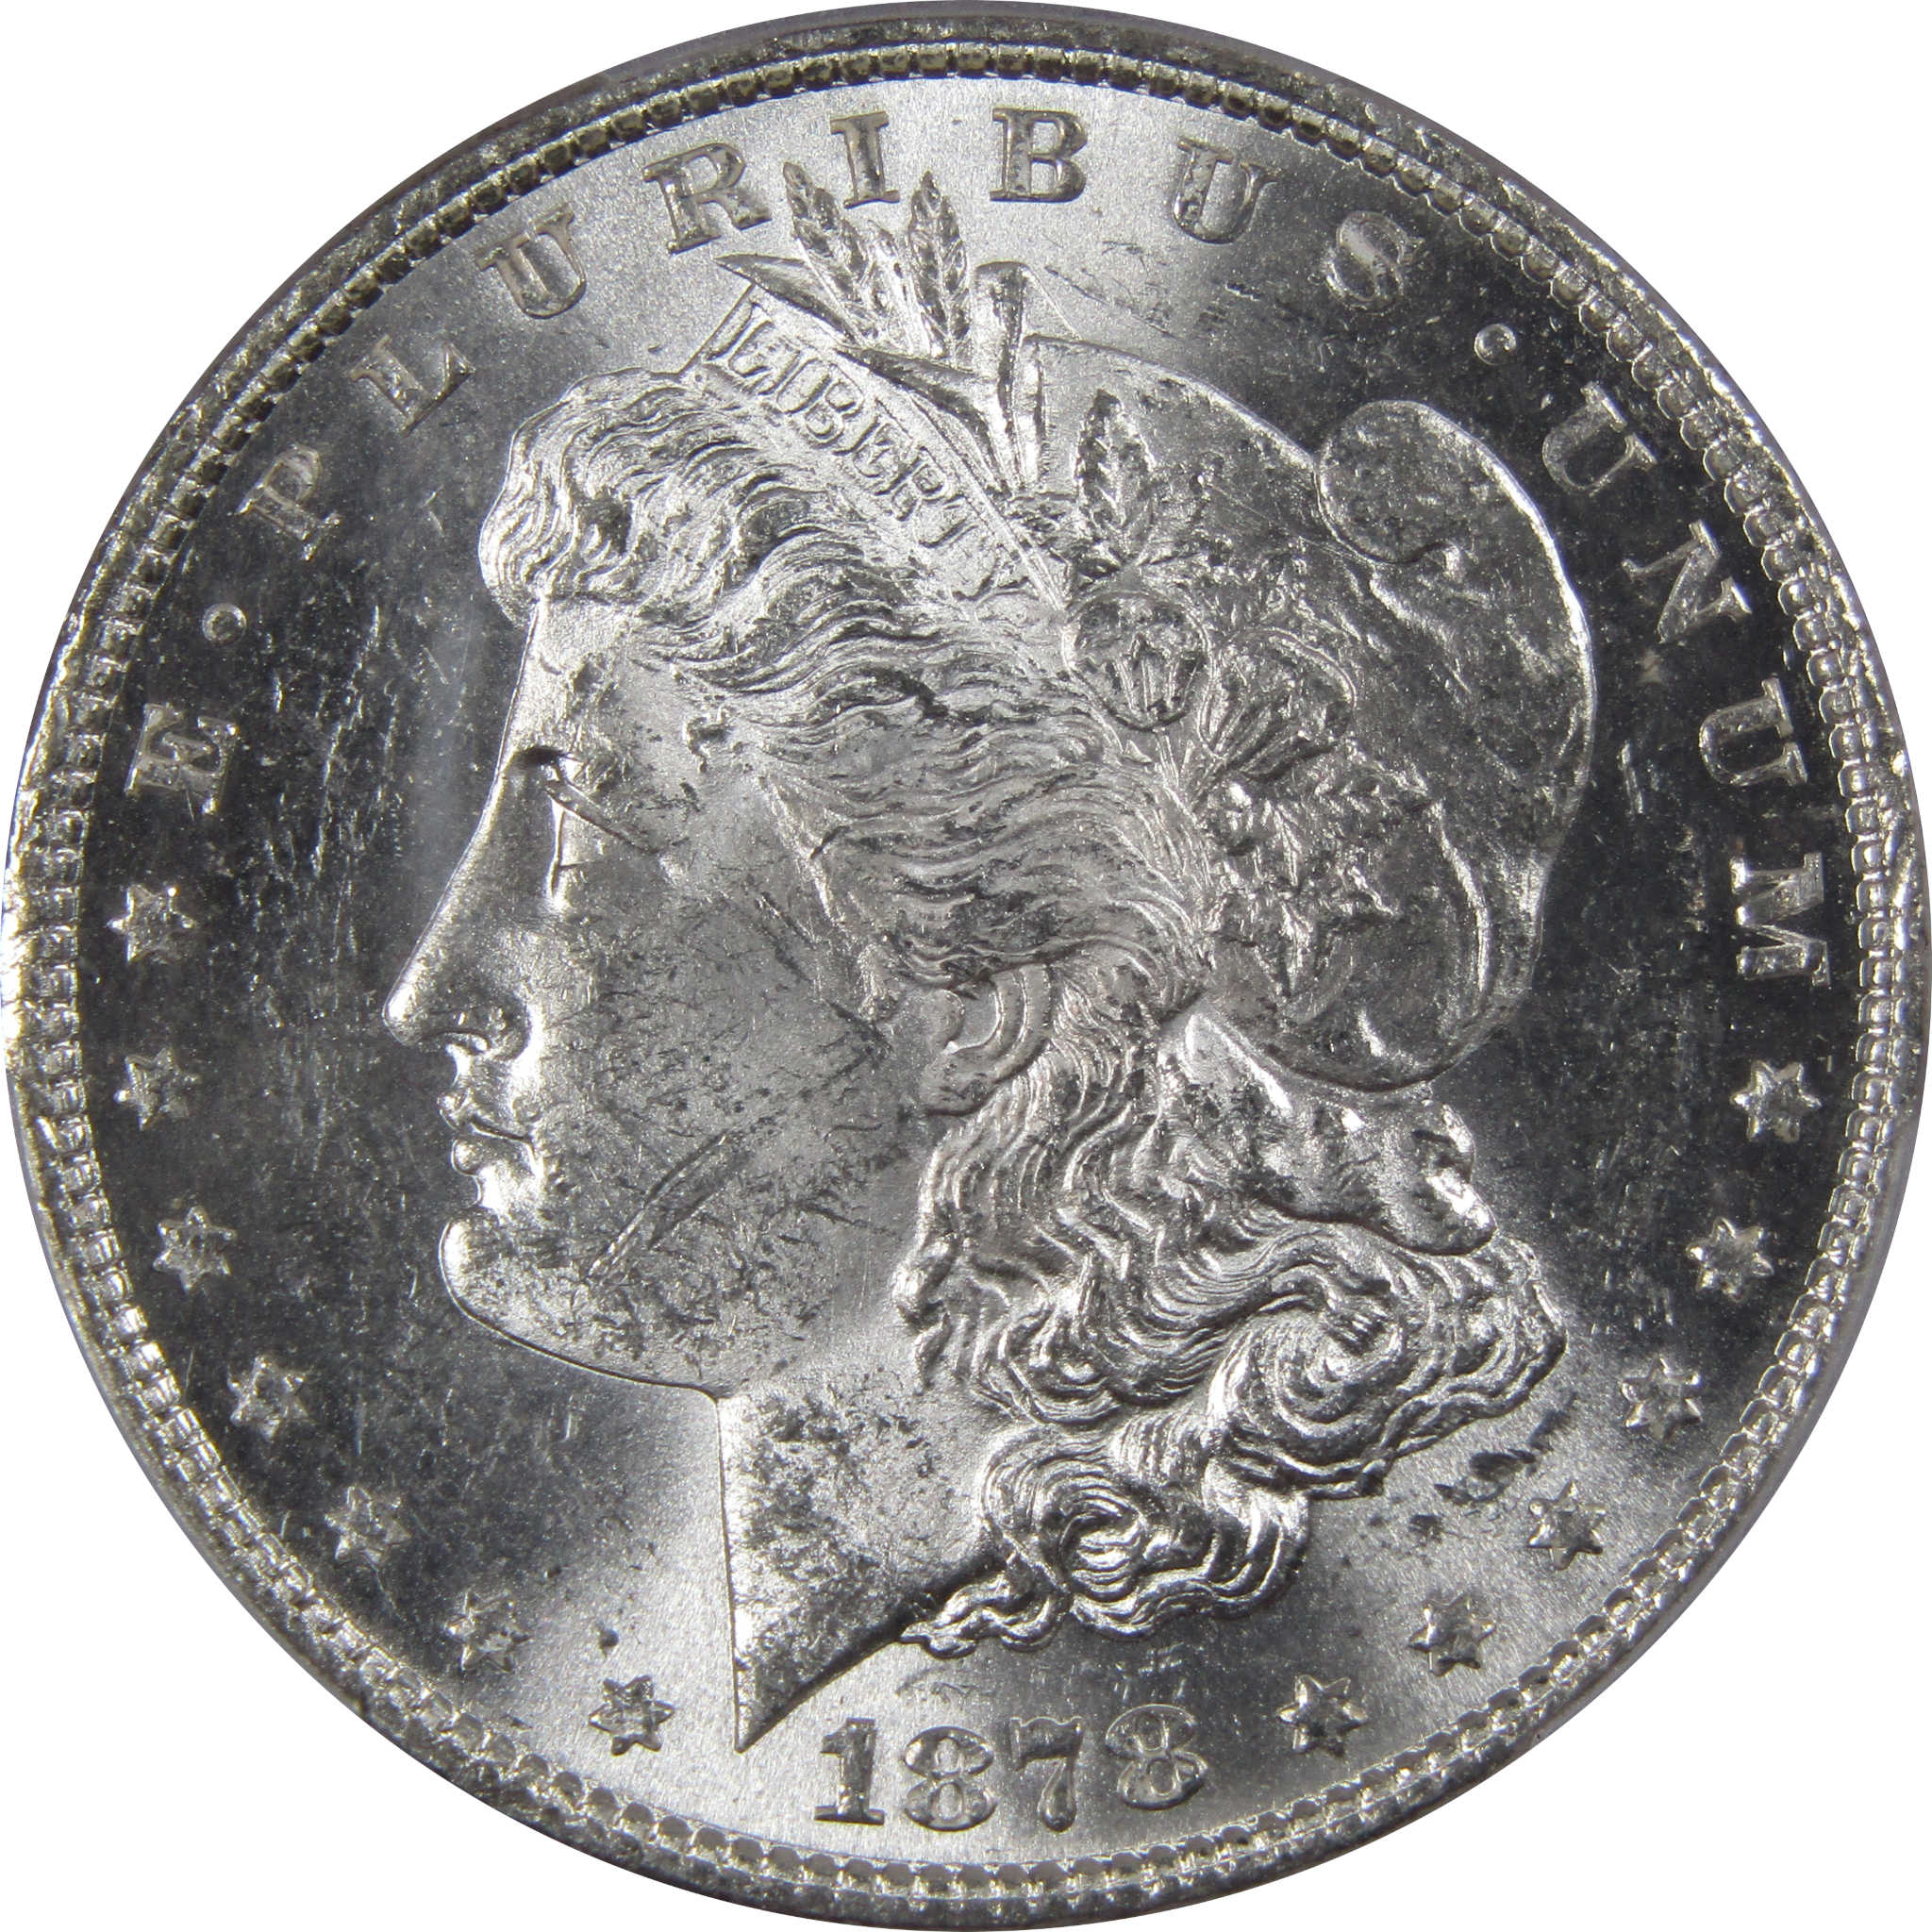 1878 7TF Rev 79 Morgan Dollar MS 62 PCGS Silver SKU:IPC6192 - Morgan coin - Morgan silver dollar - Morgan silver dollar for sale - Profile Coins &amp; Collectibles